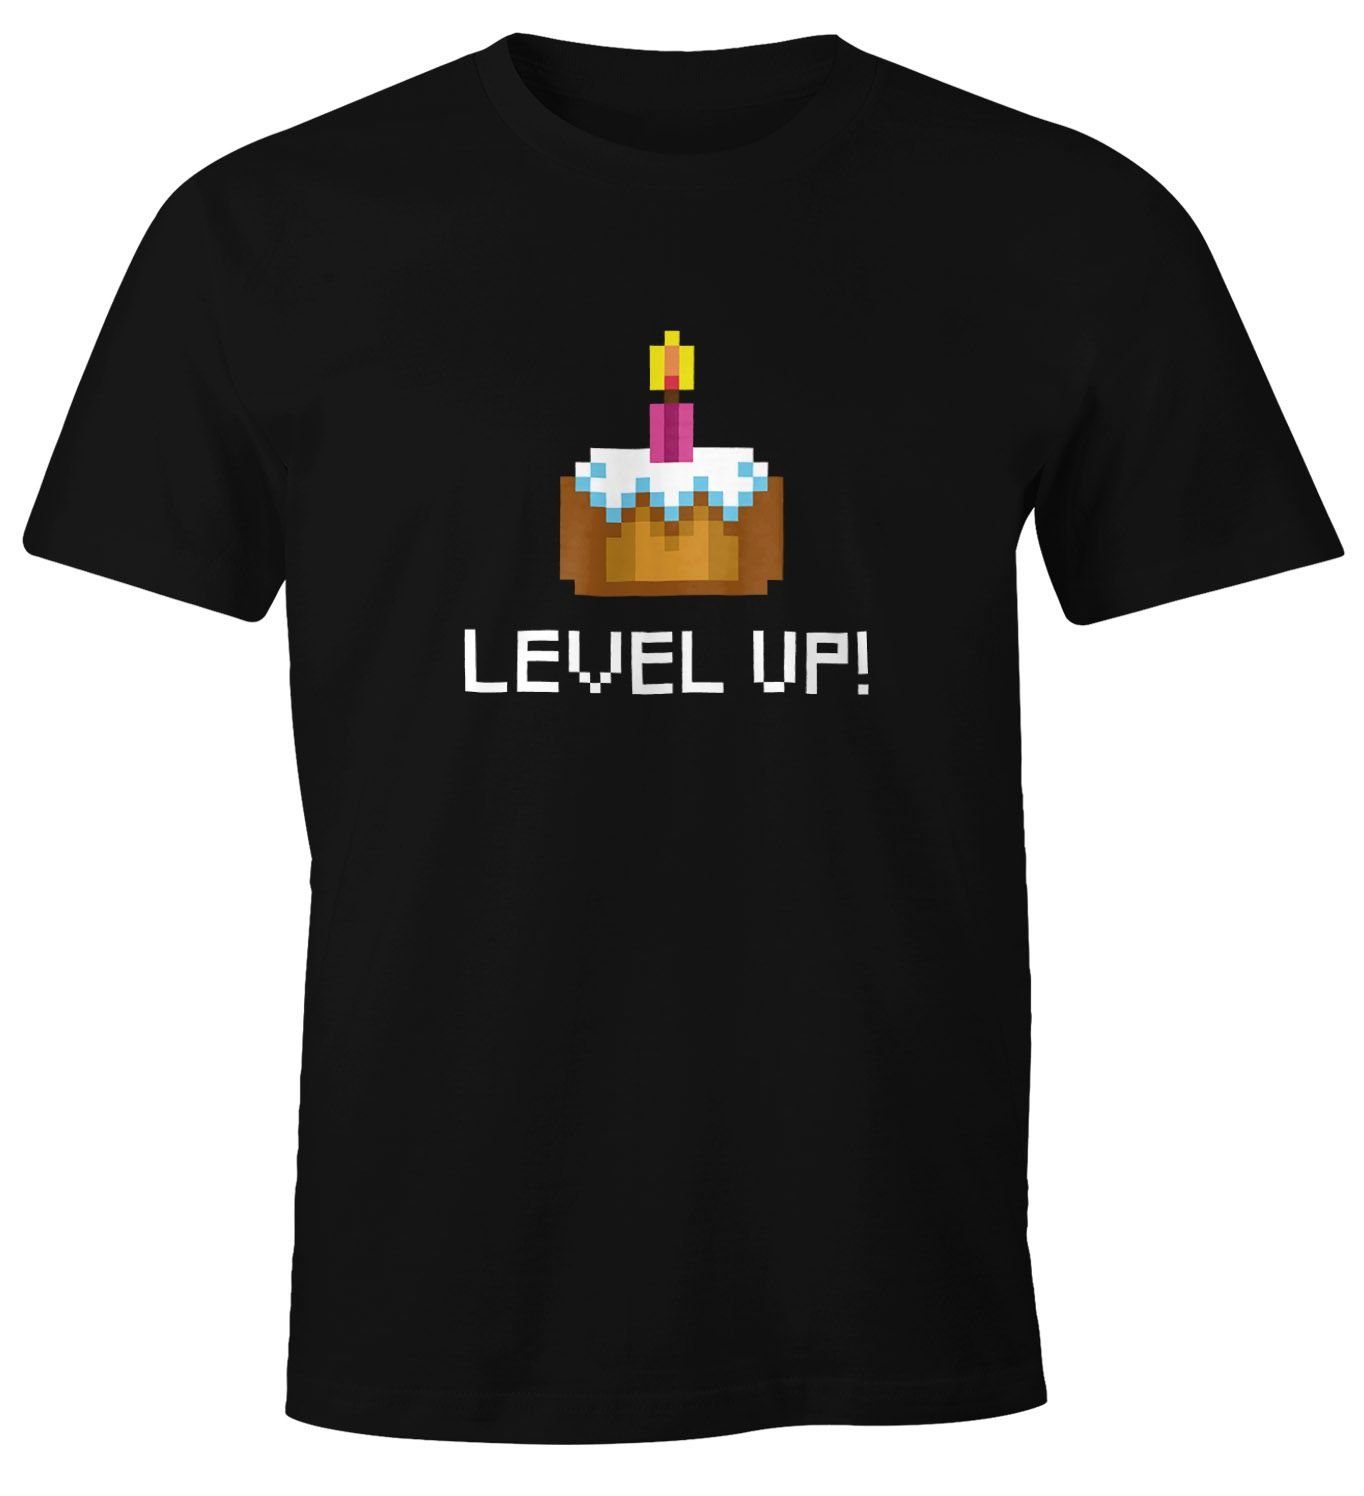 schwarz Pixel-Torte T-Shirt Geburtstag Moonworks® Fun-Shirt Print Up Pixelgrafik Herren mit Level Print-Shirt Gamer MoonWorks Retro Arcade Geschenk